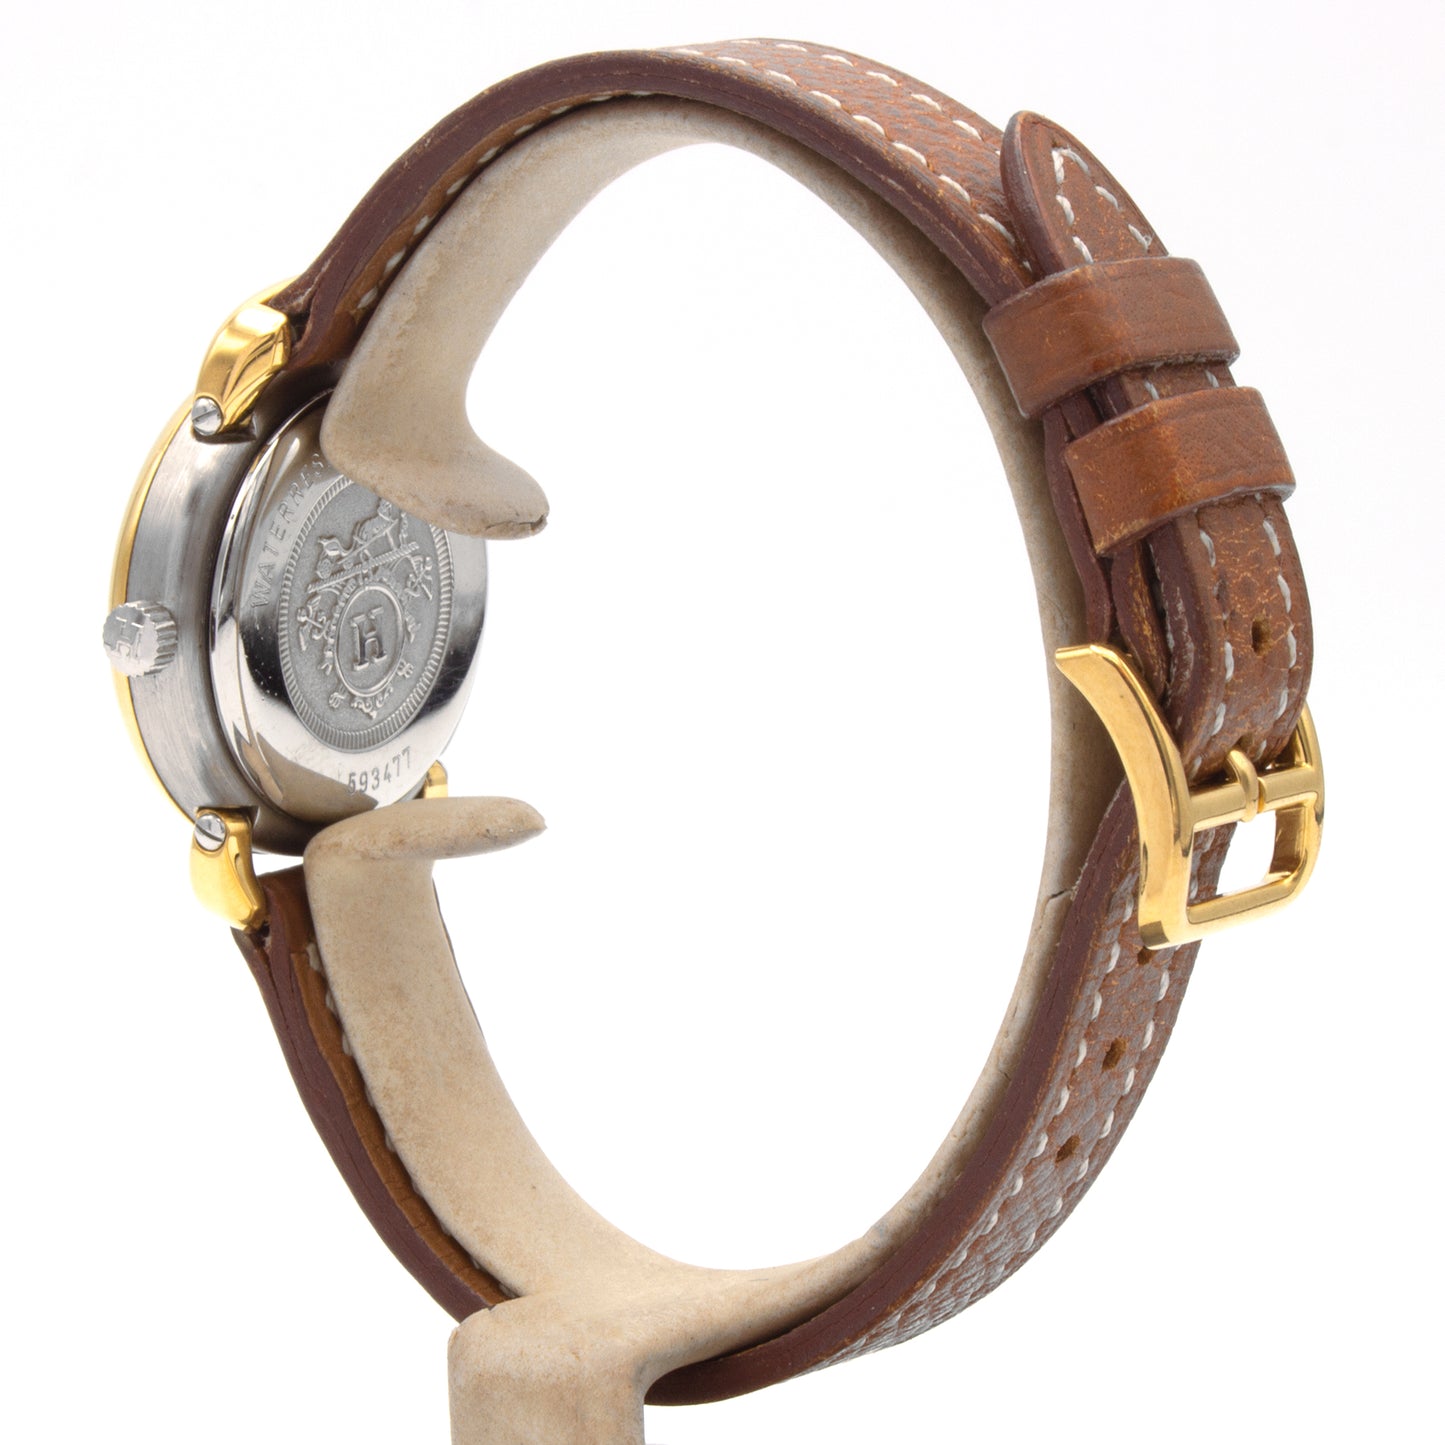 Hermès Pullman 25mm watch